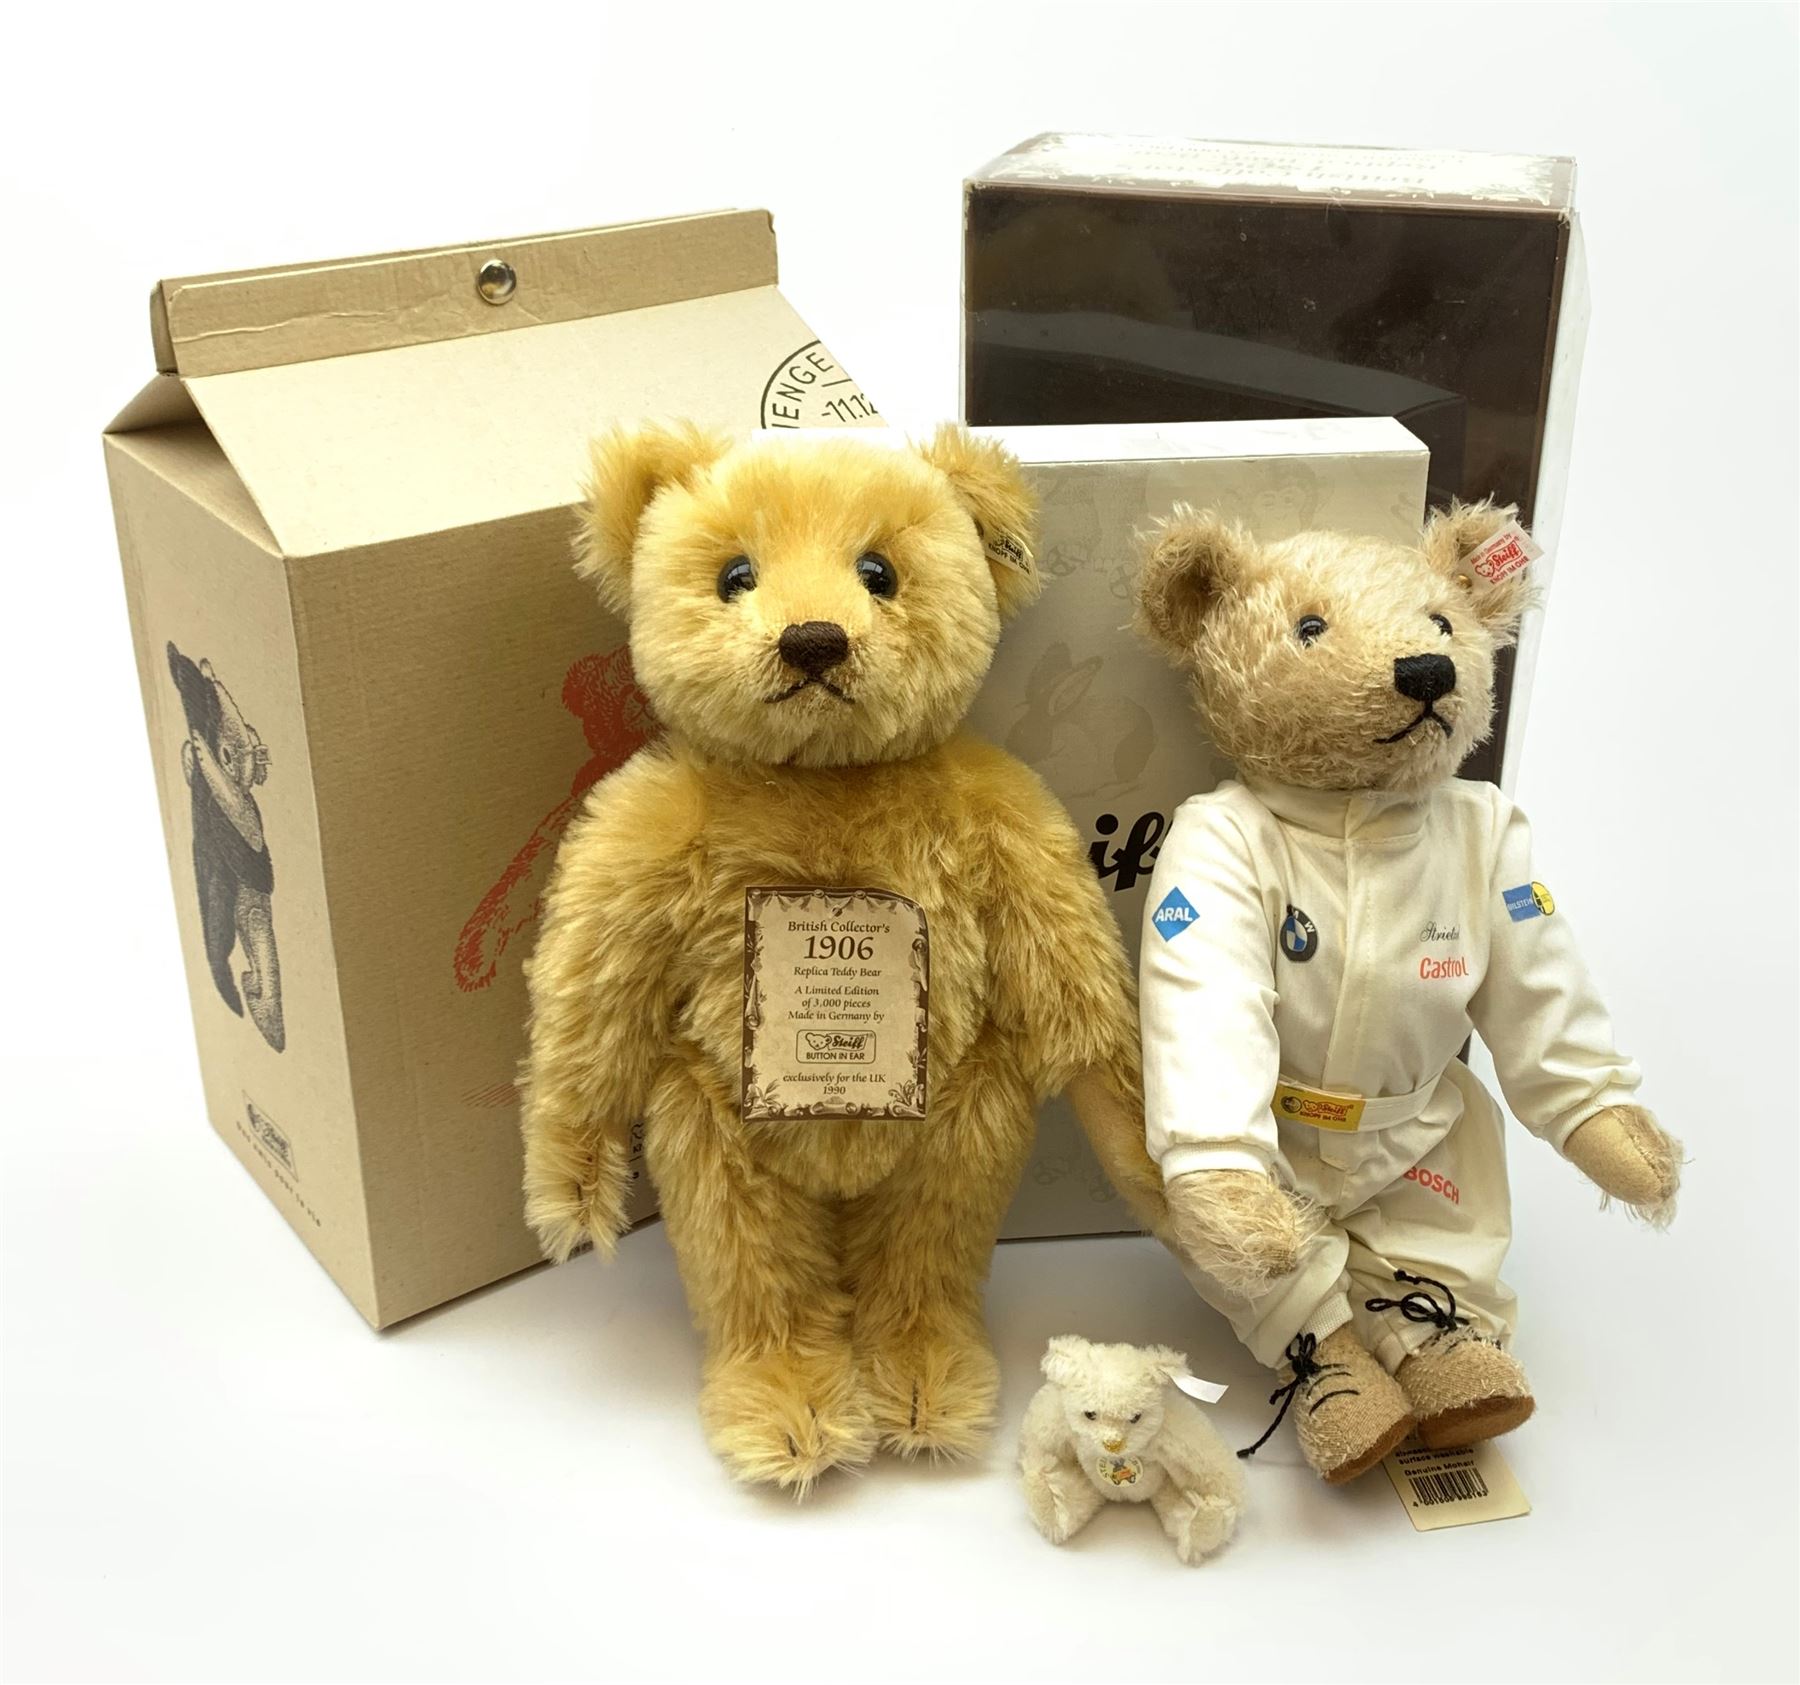 Steiff - limited edition 'Racing Driver' teddy bear wearing